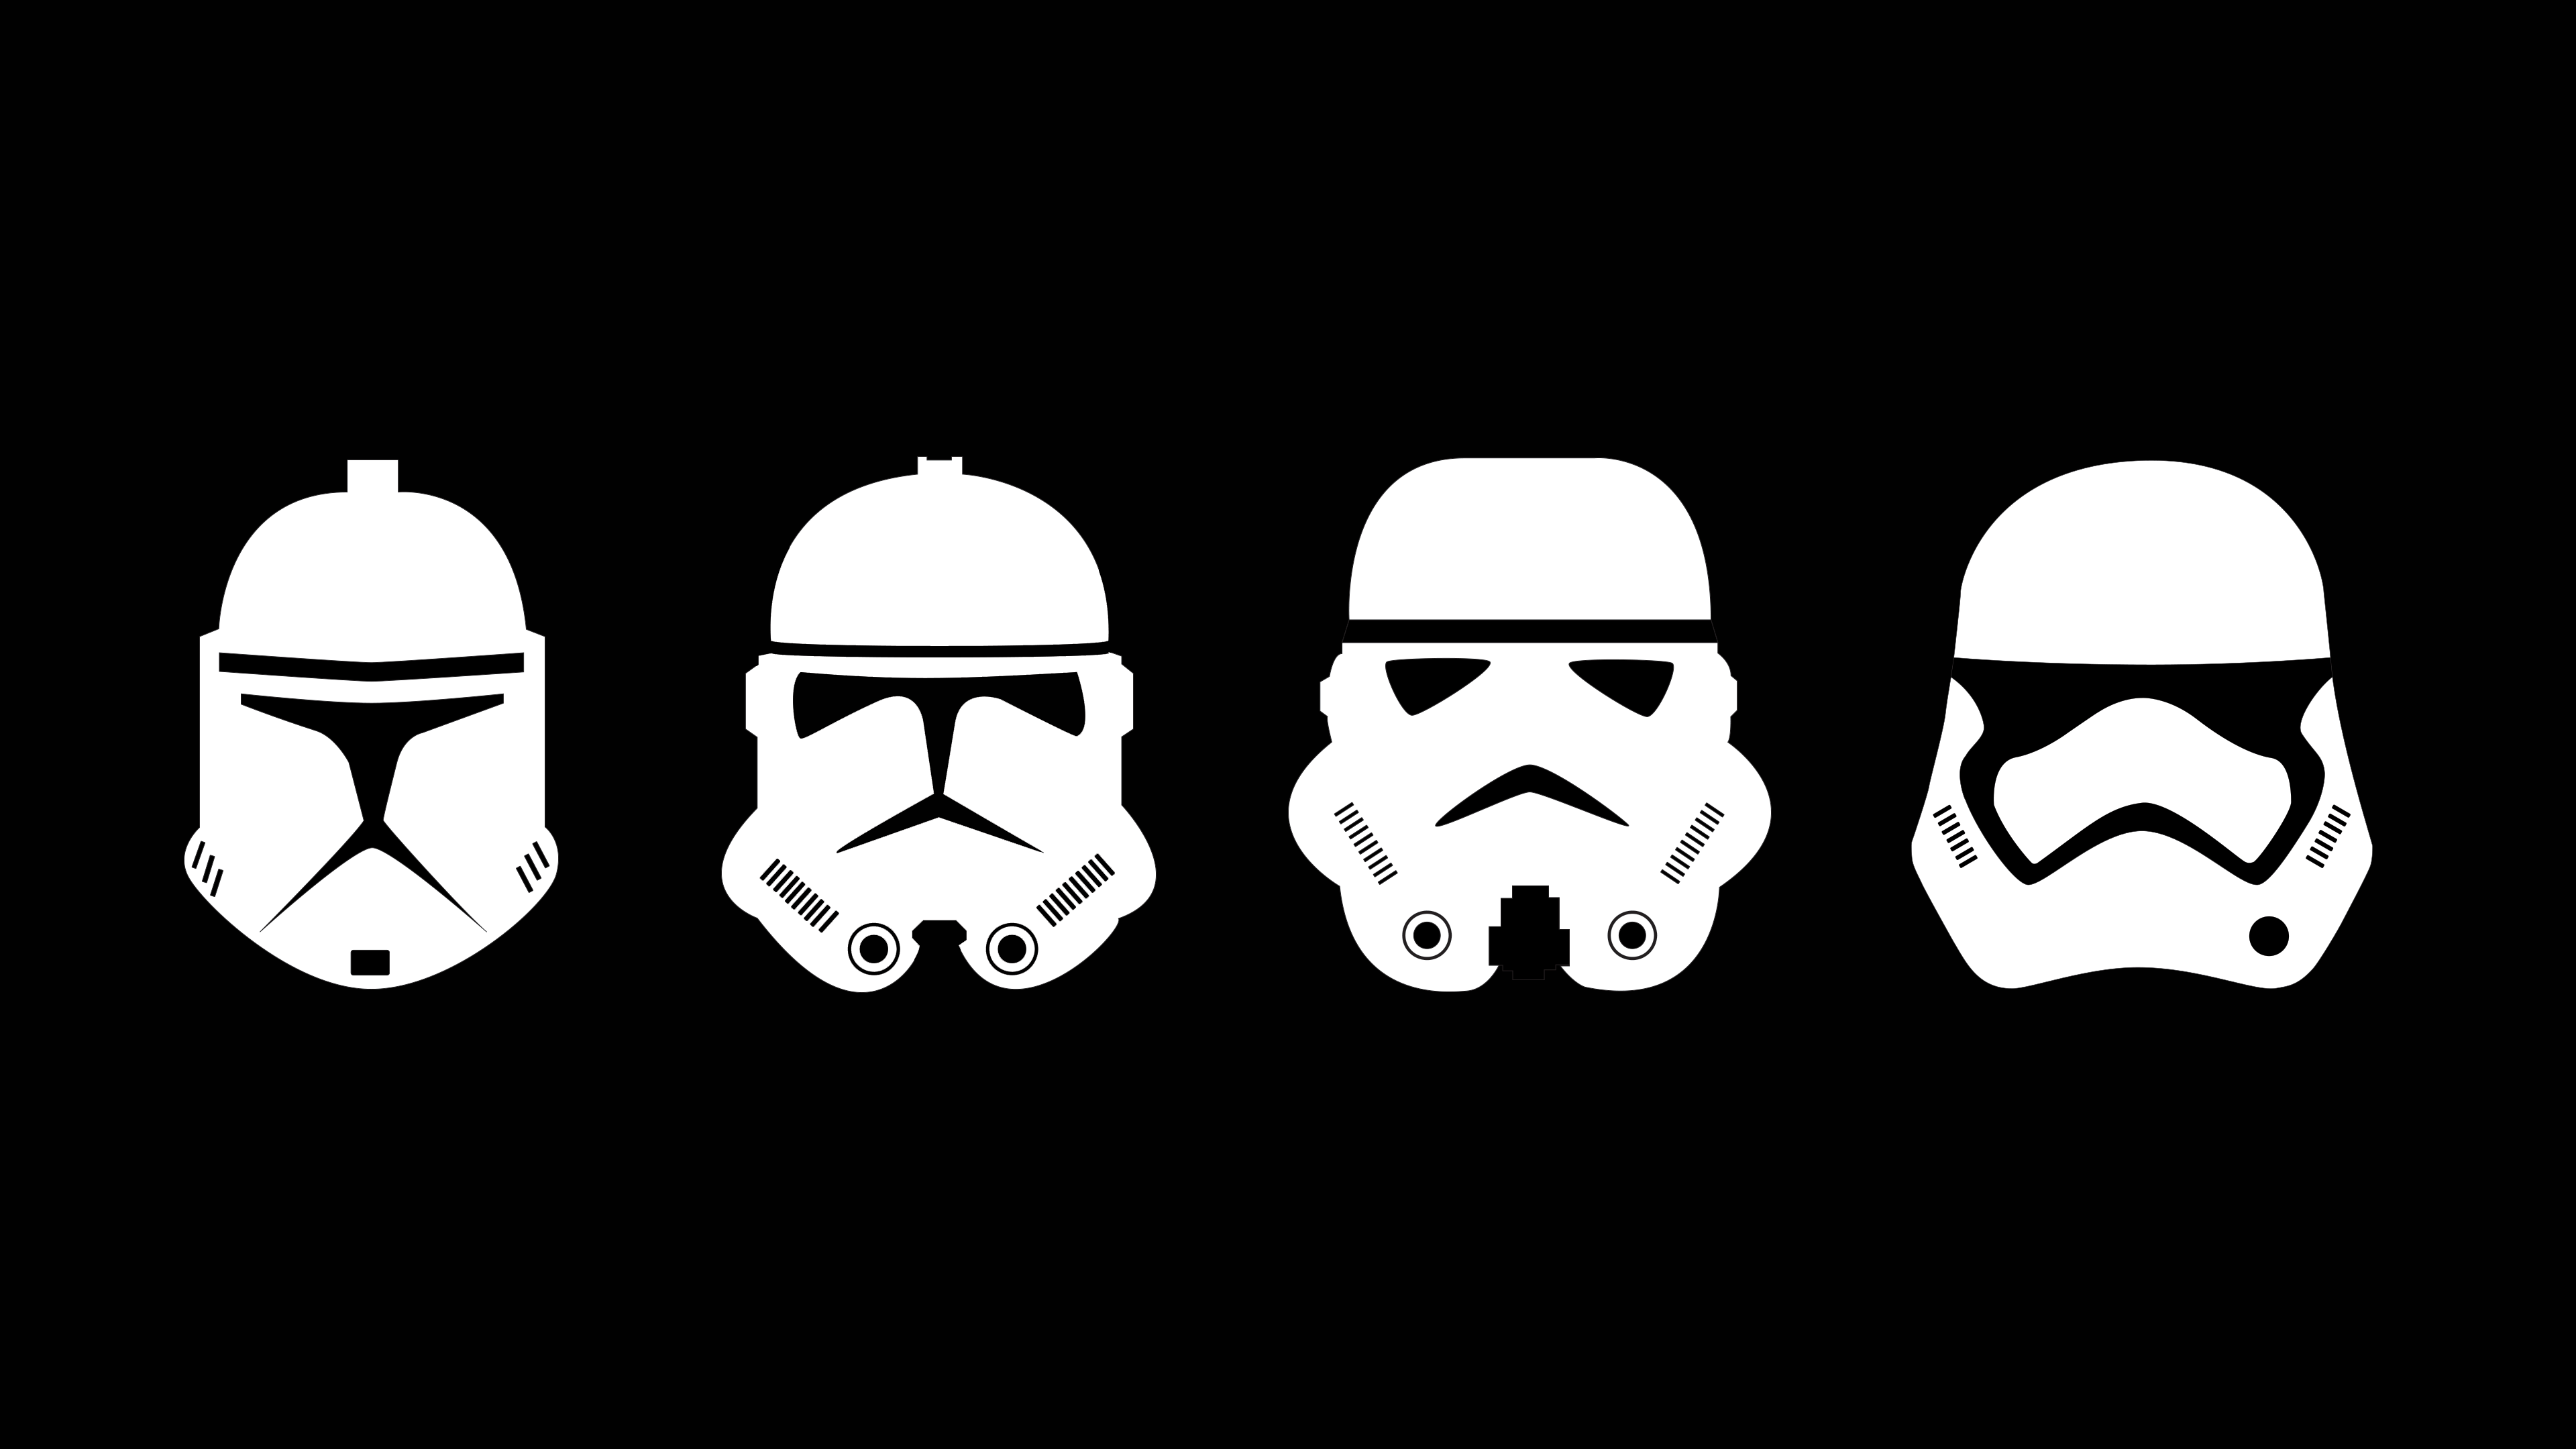 I made a minimal wallpaper of the clone trooper helmets